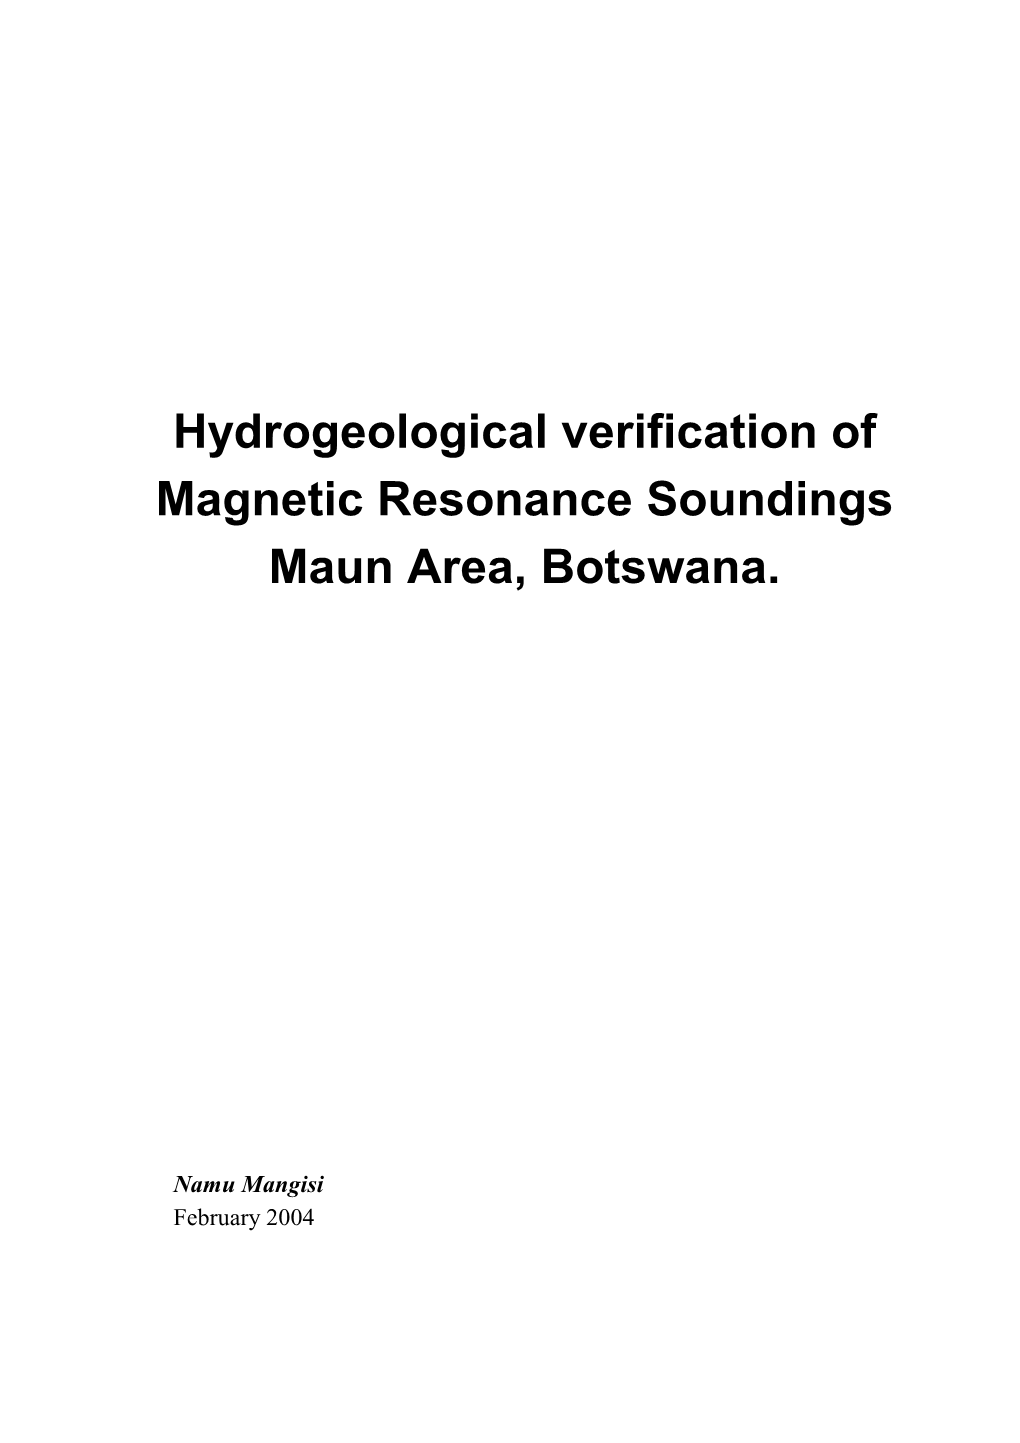 Hydrogeological Verification of Magnetic Resonance Soundings Maun Area, Botswana